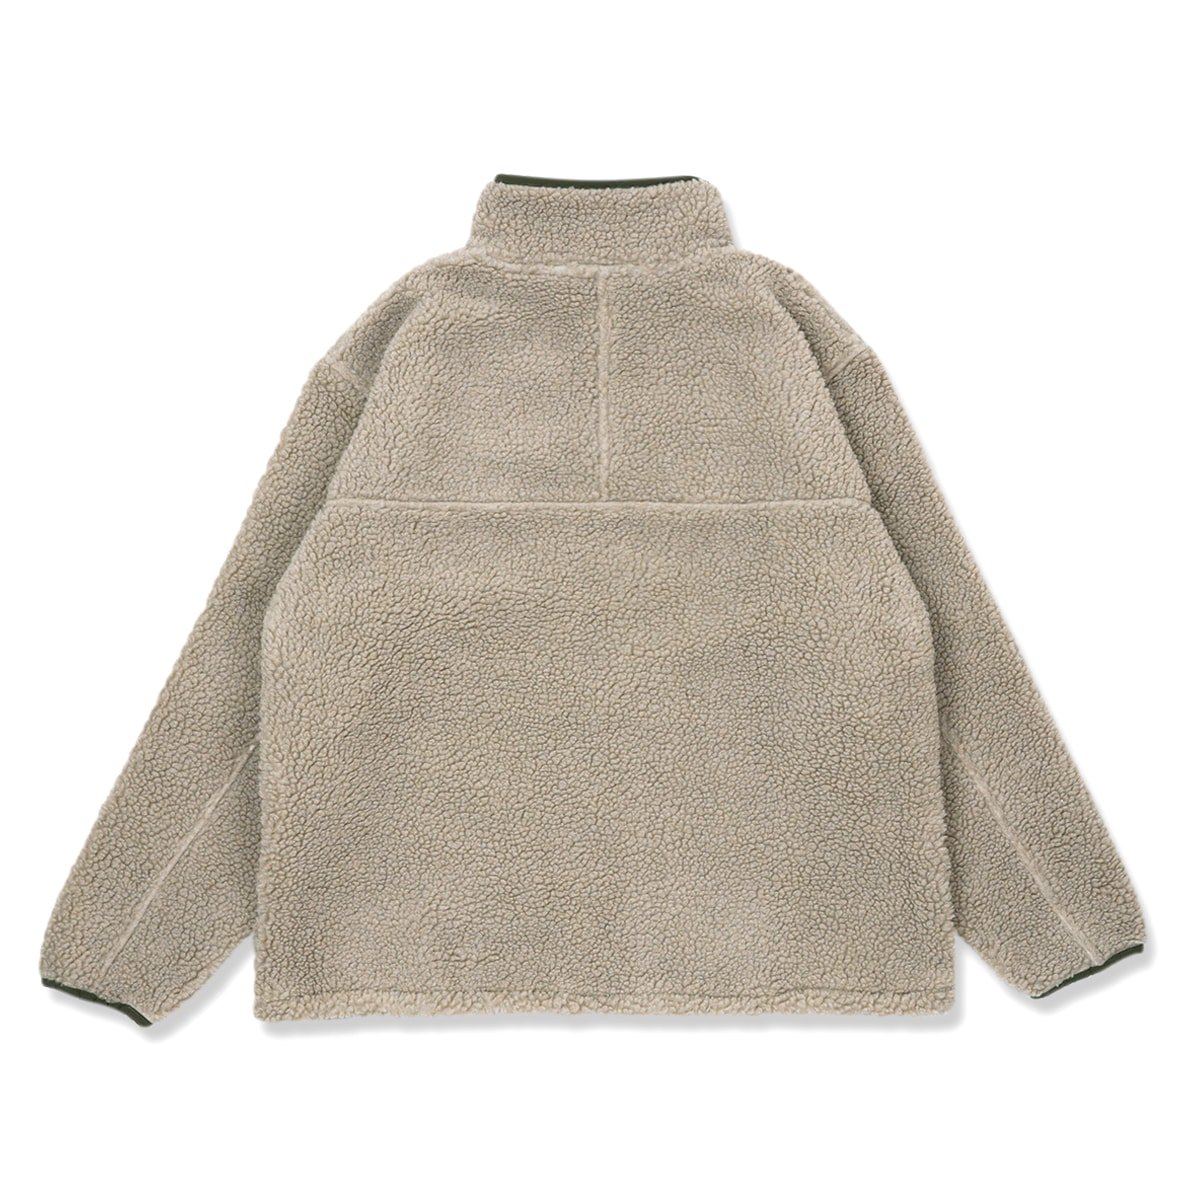 damask boa fleece jacket【smoky beige】 - Arch ☆ アーチ 